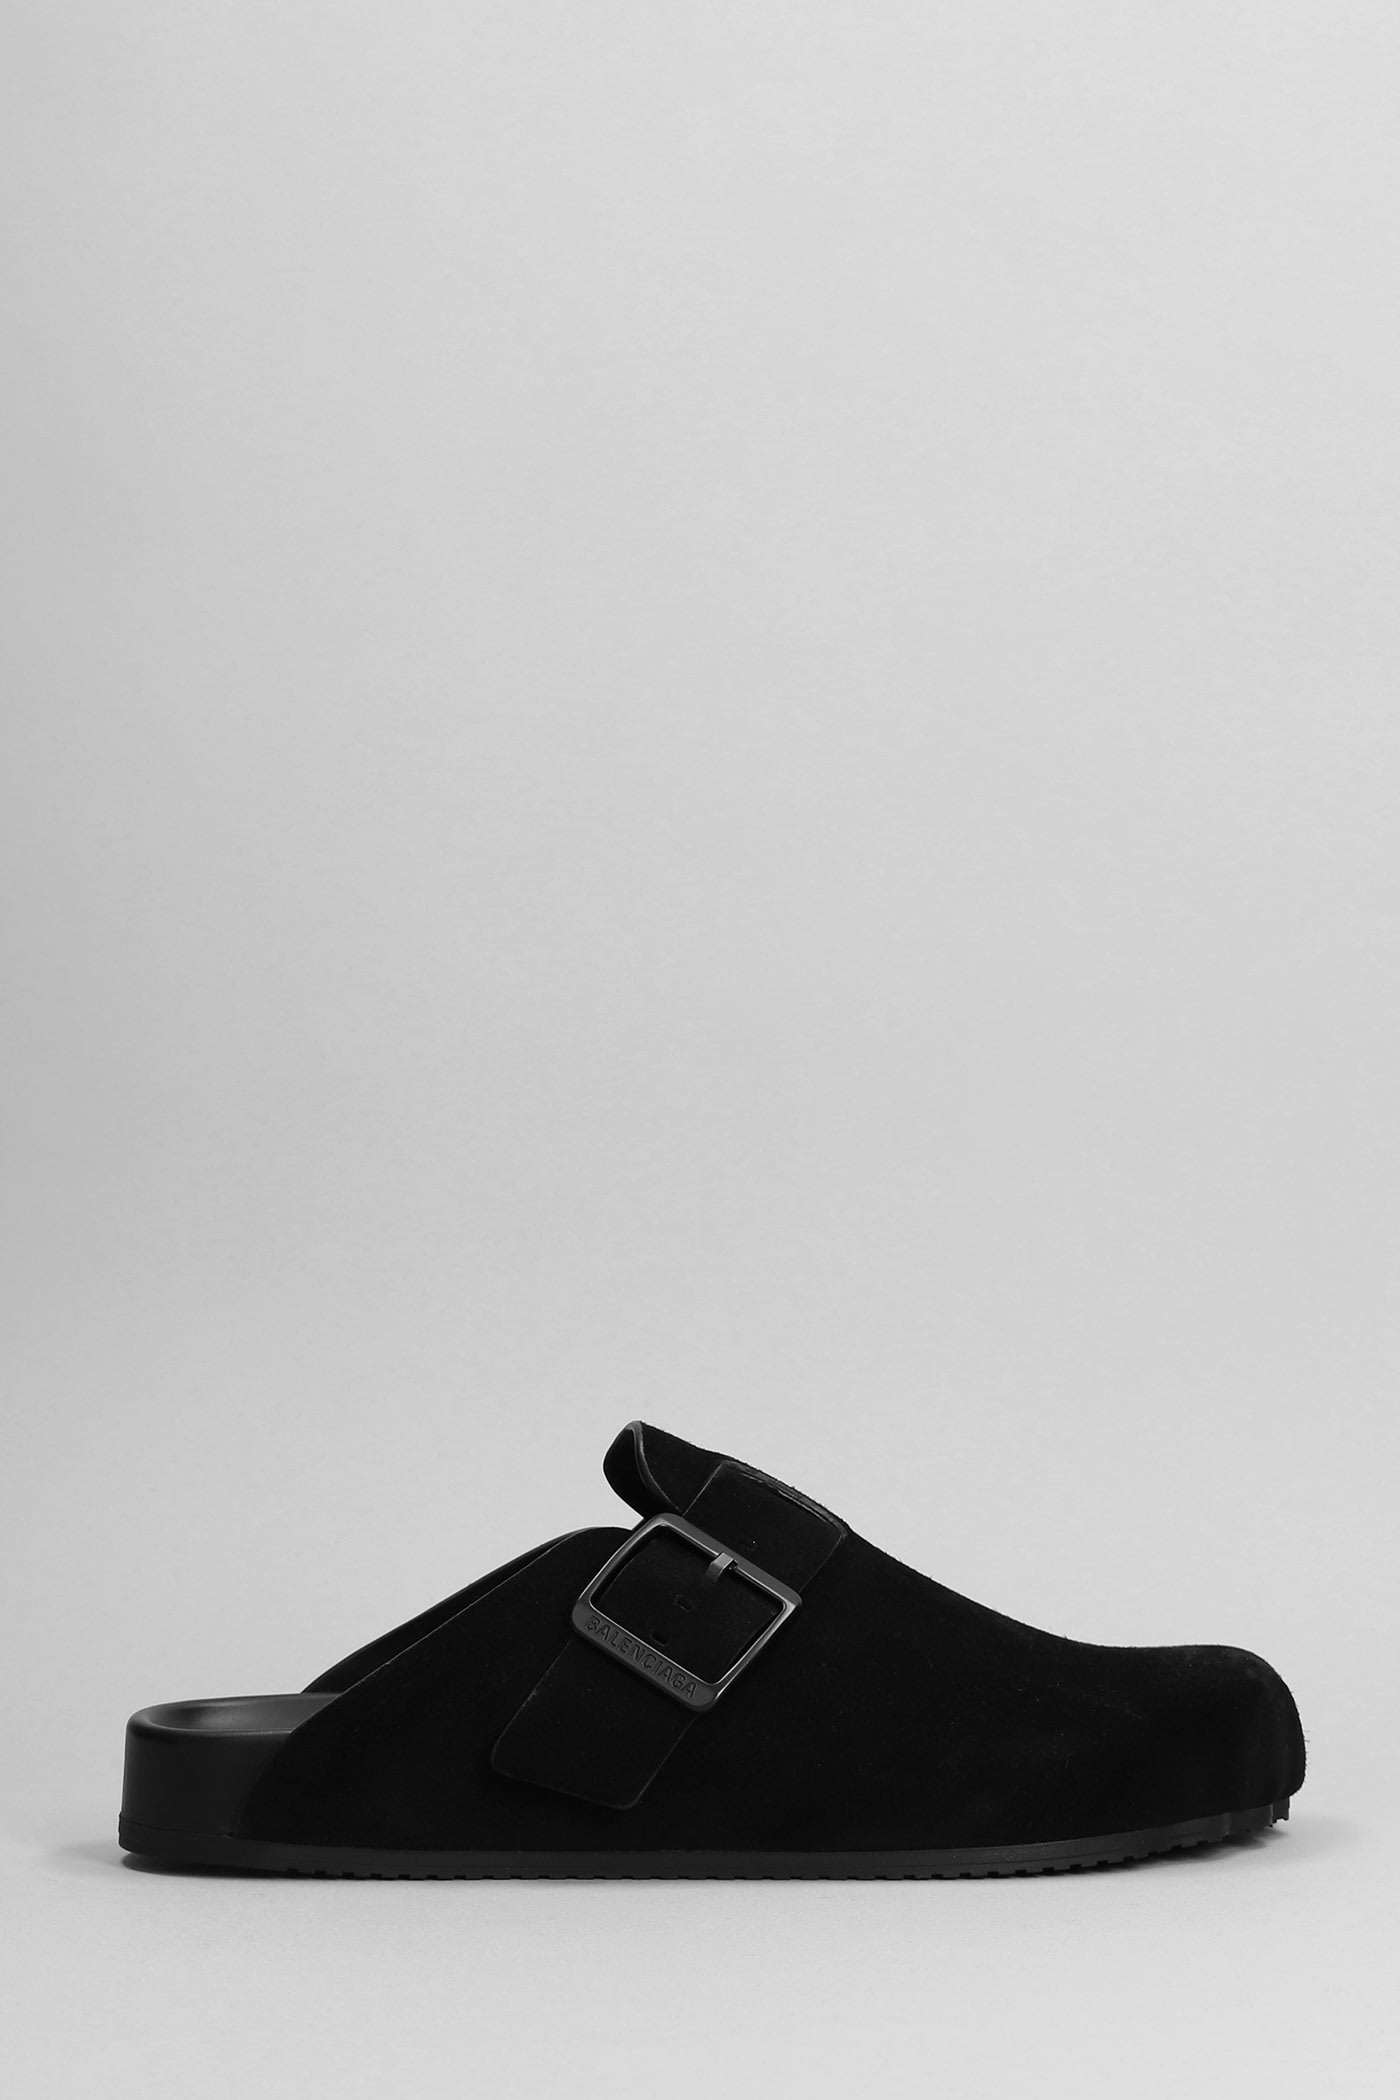 Balenciaga Sunday Mule Slipper-mule In Black Leather